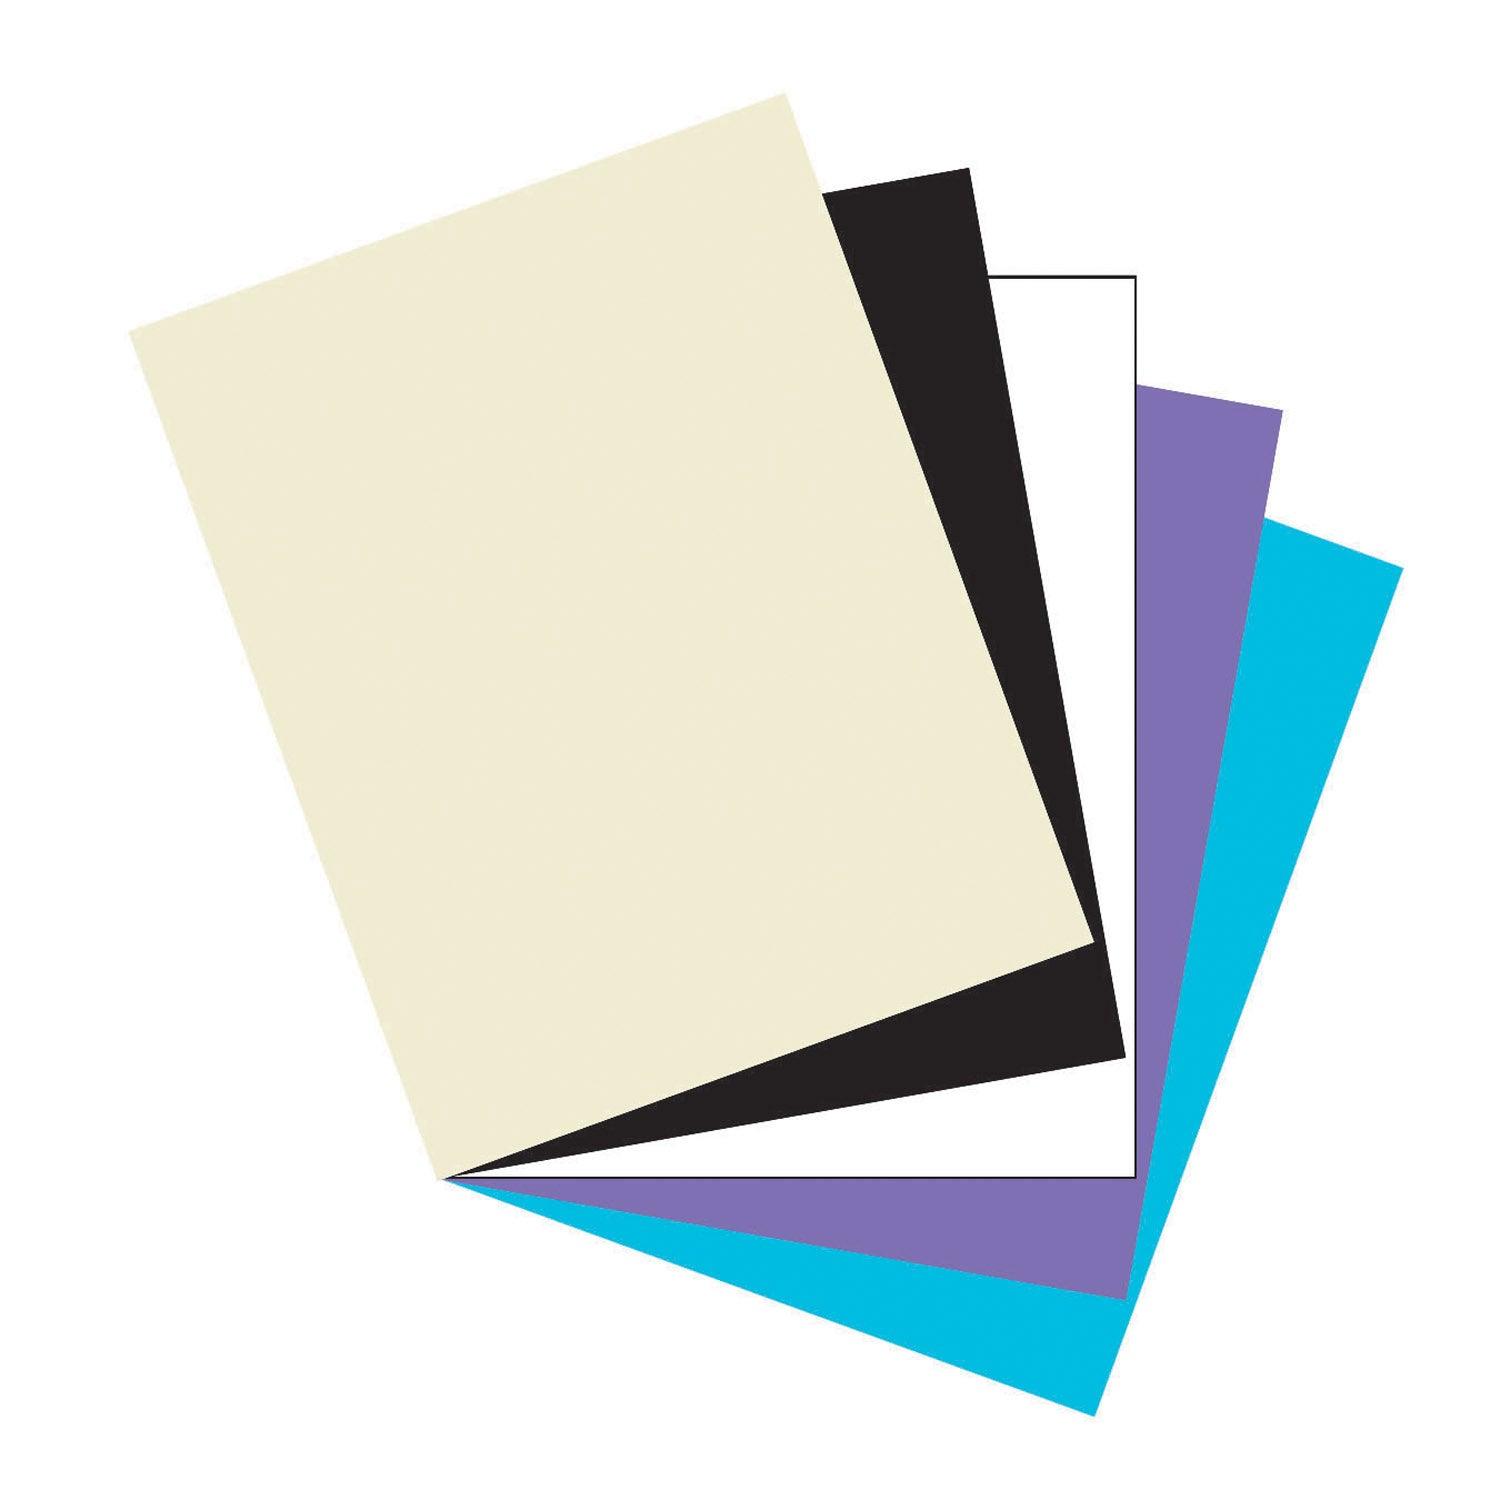 Classic Card Stock, 5 Assorted Colors, 8-1/2" x 11", 100 Sheets Per Pack, 2 Packs - Loomini